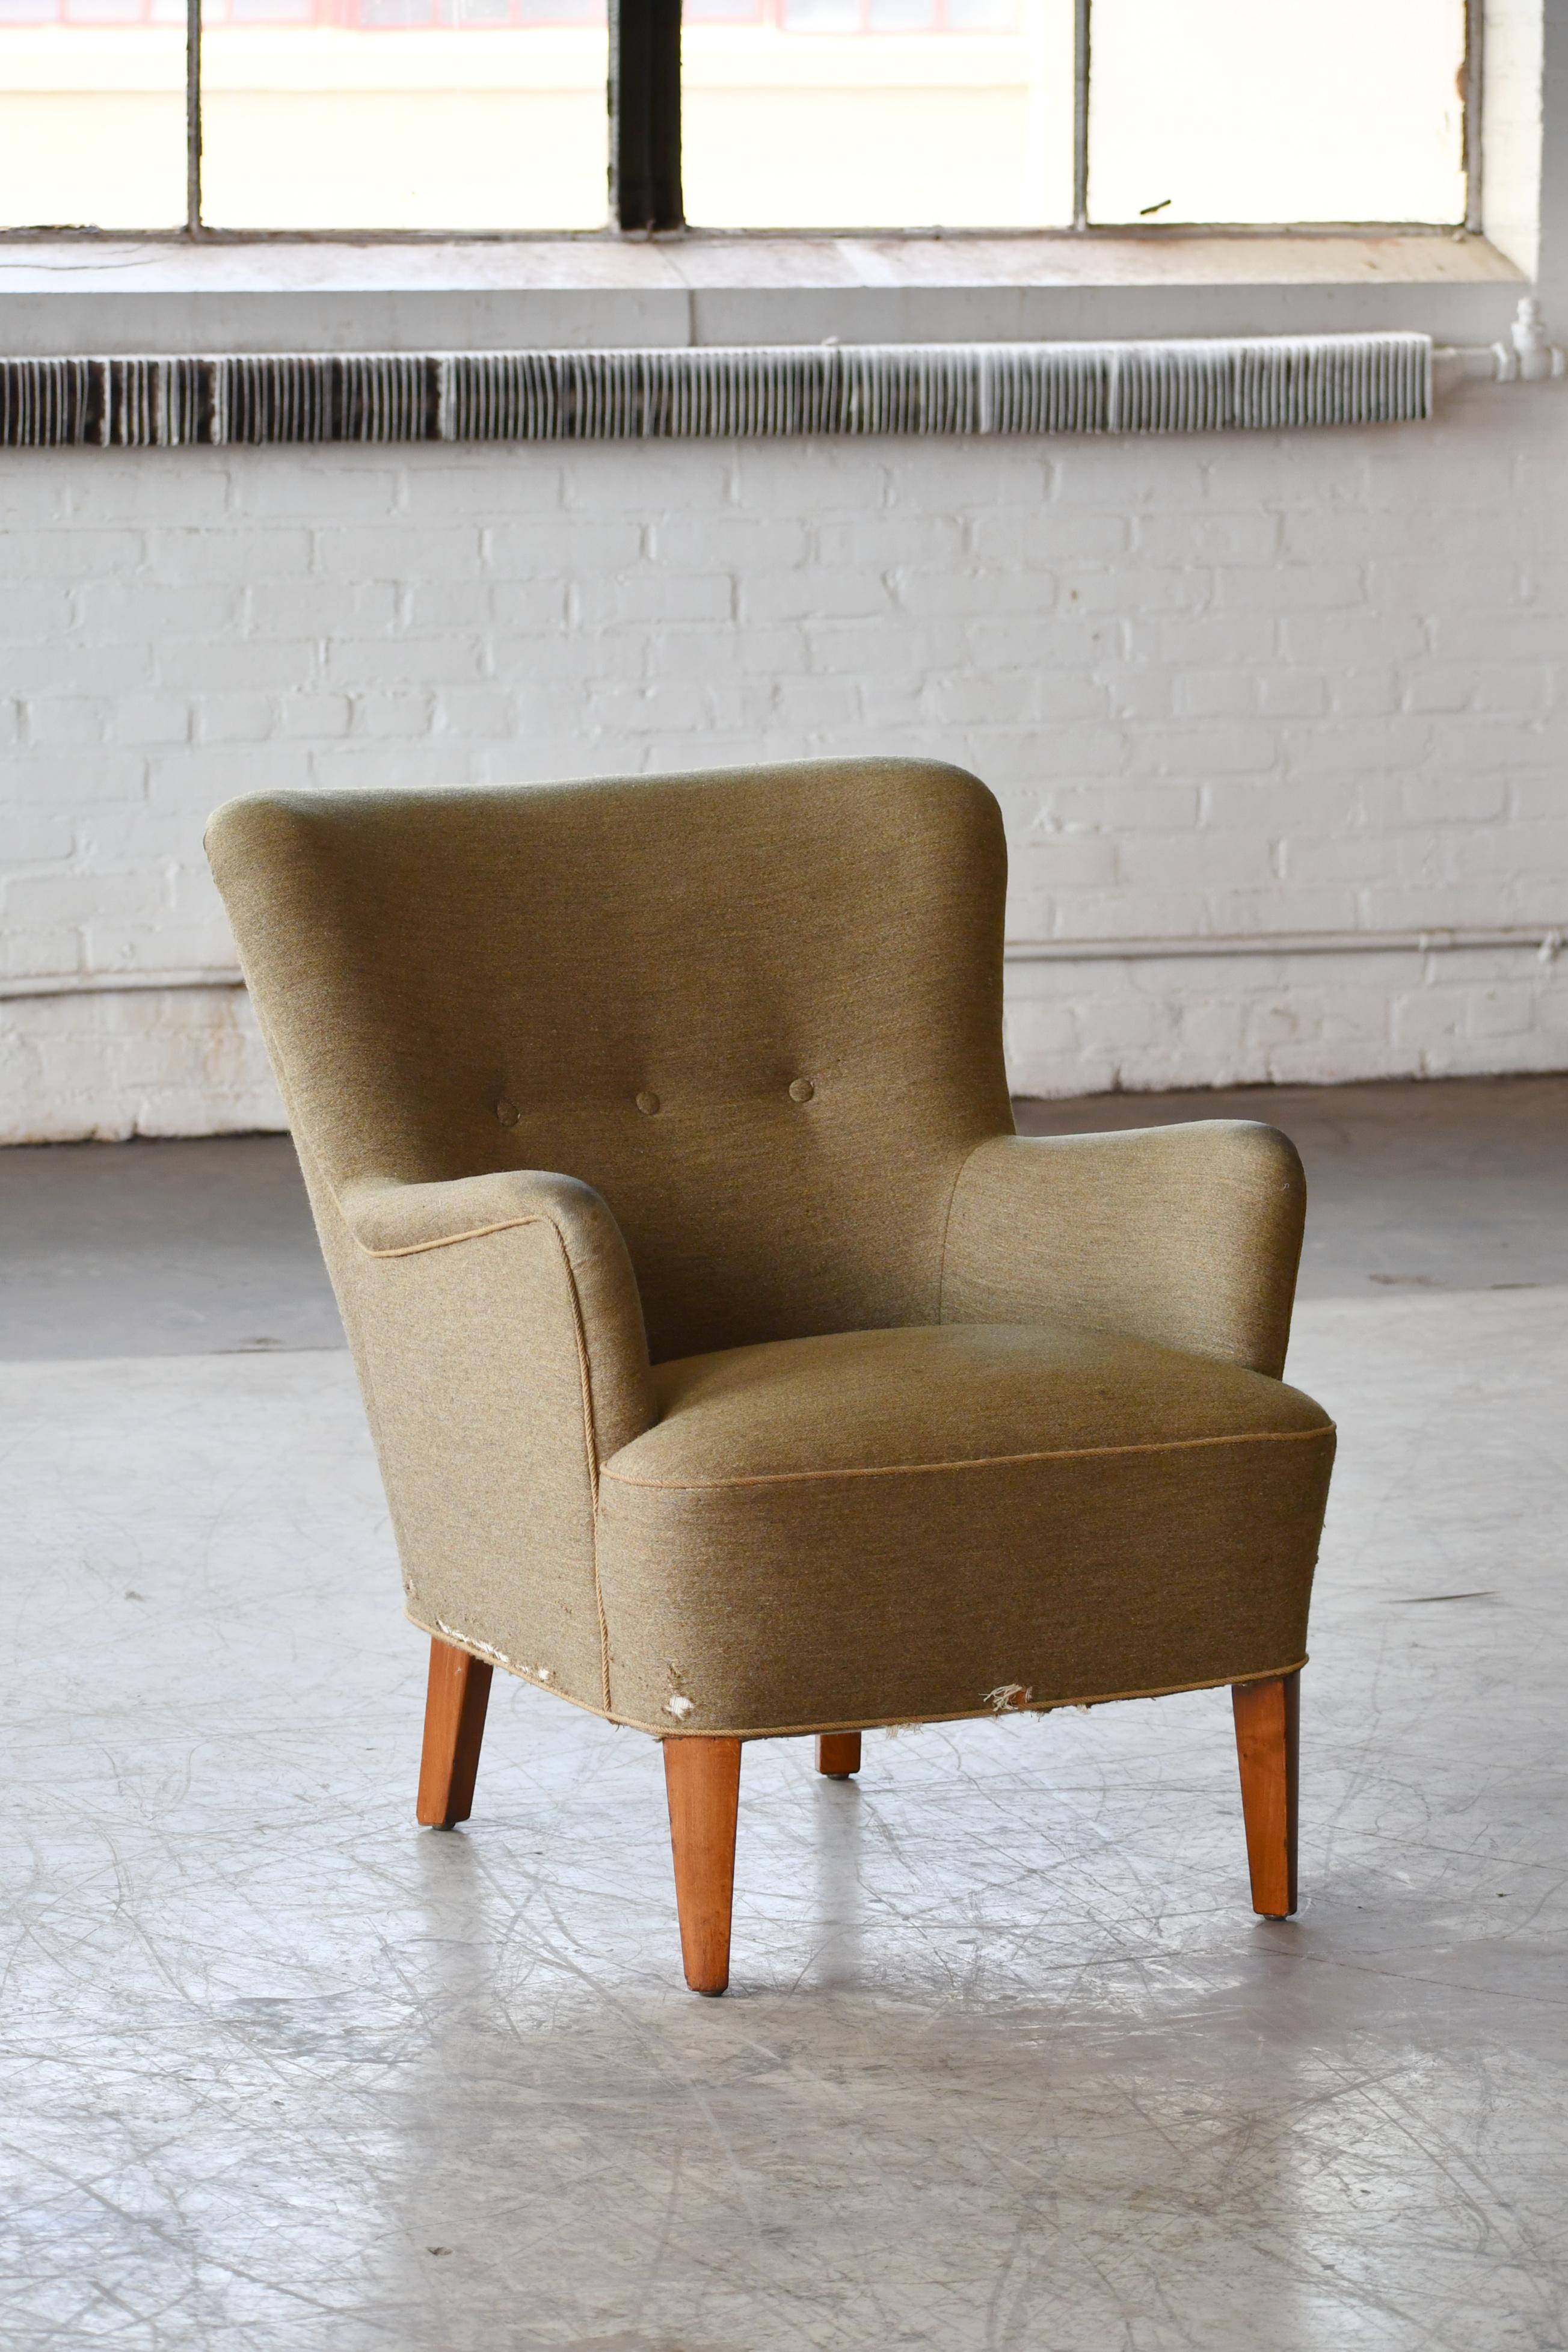 Mohair Peter Hvidt Orla Molgaard Style Classic Danish 1950s Lounge Chair